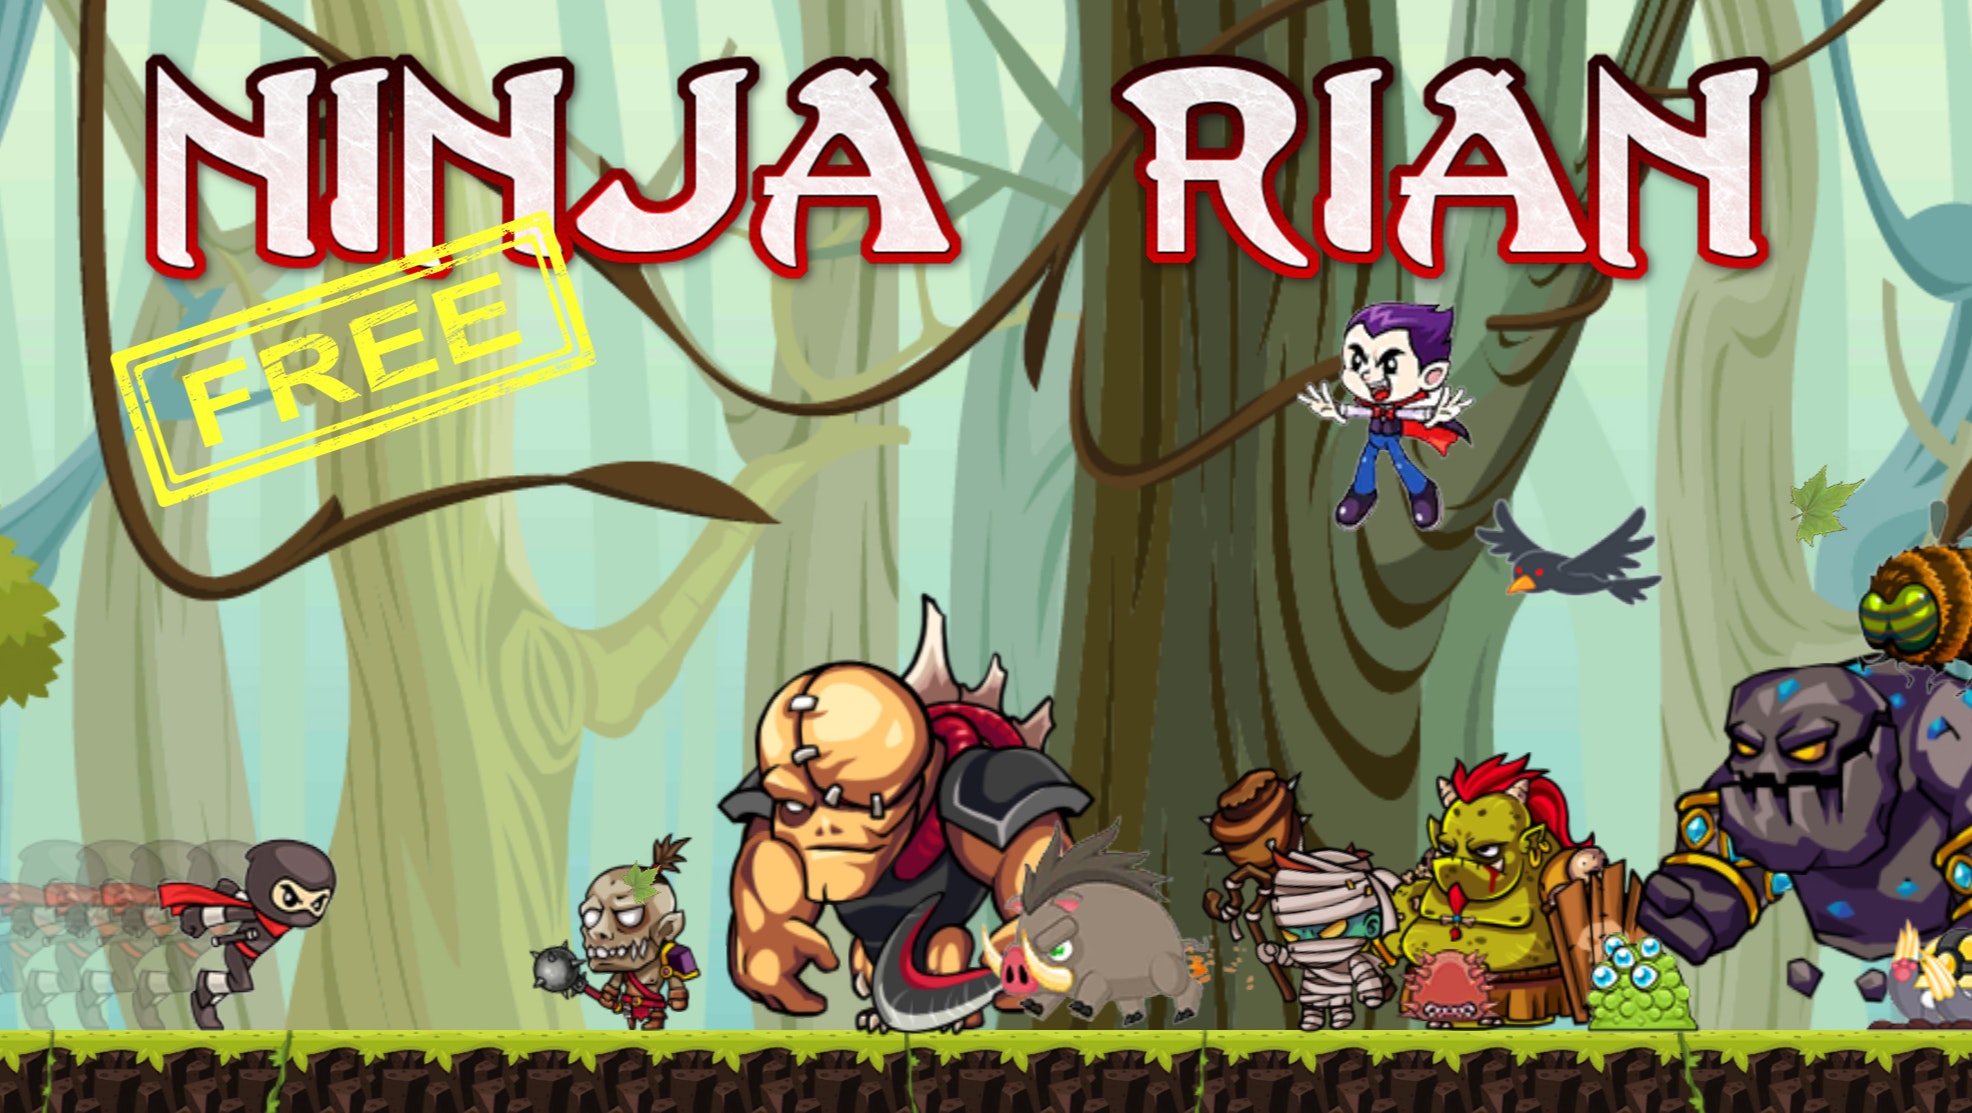 Ninja.io 🕹️ Play on CrazyGames